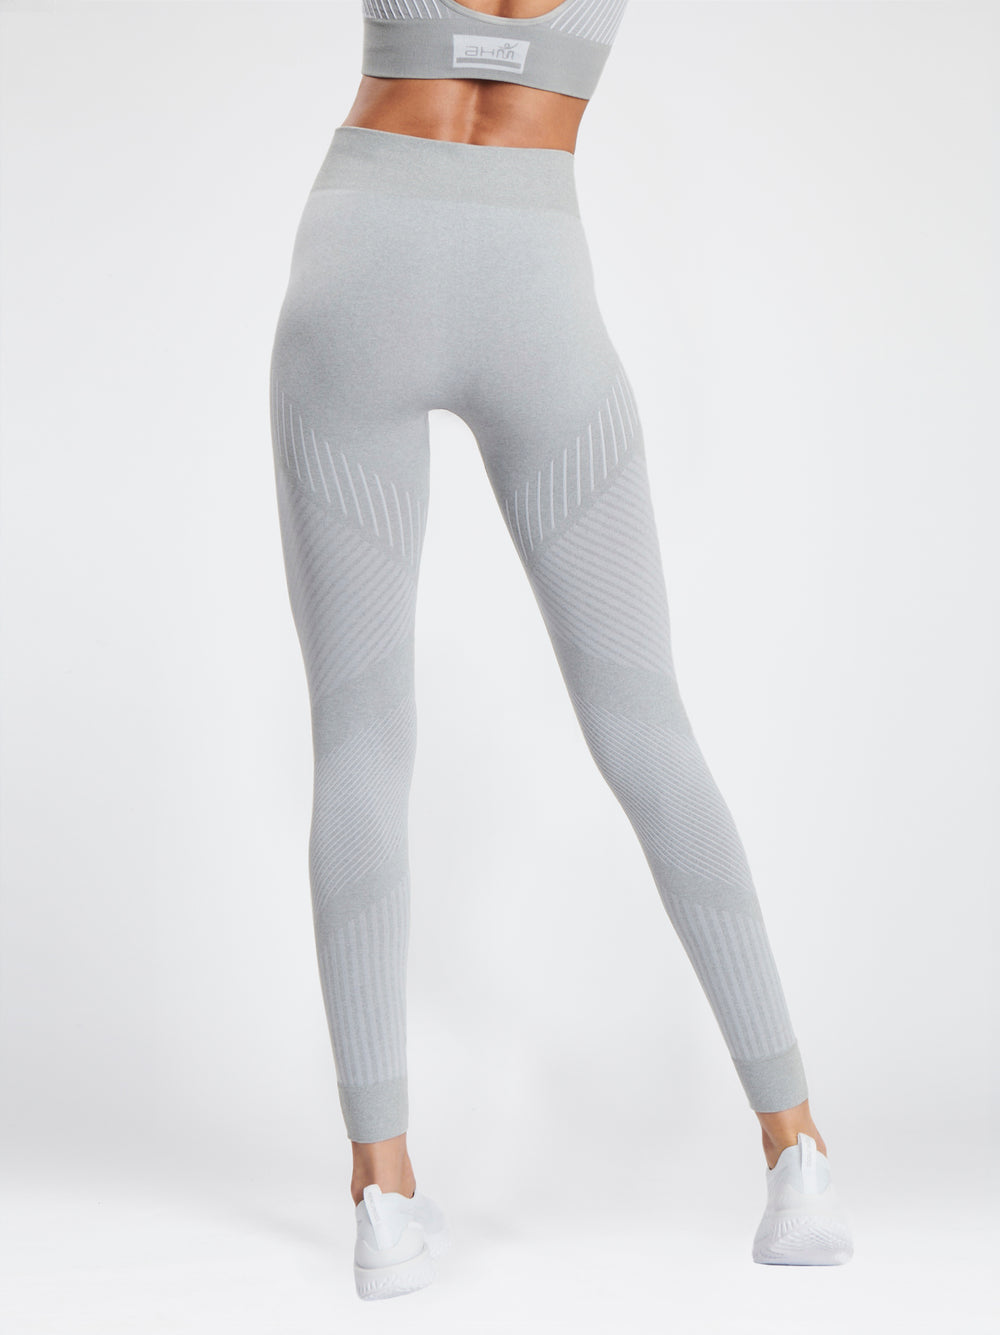 high waist flow leggings in cool gray